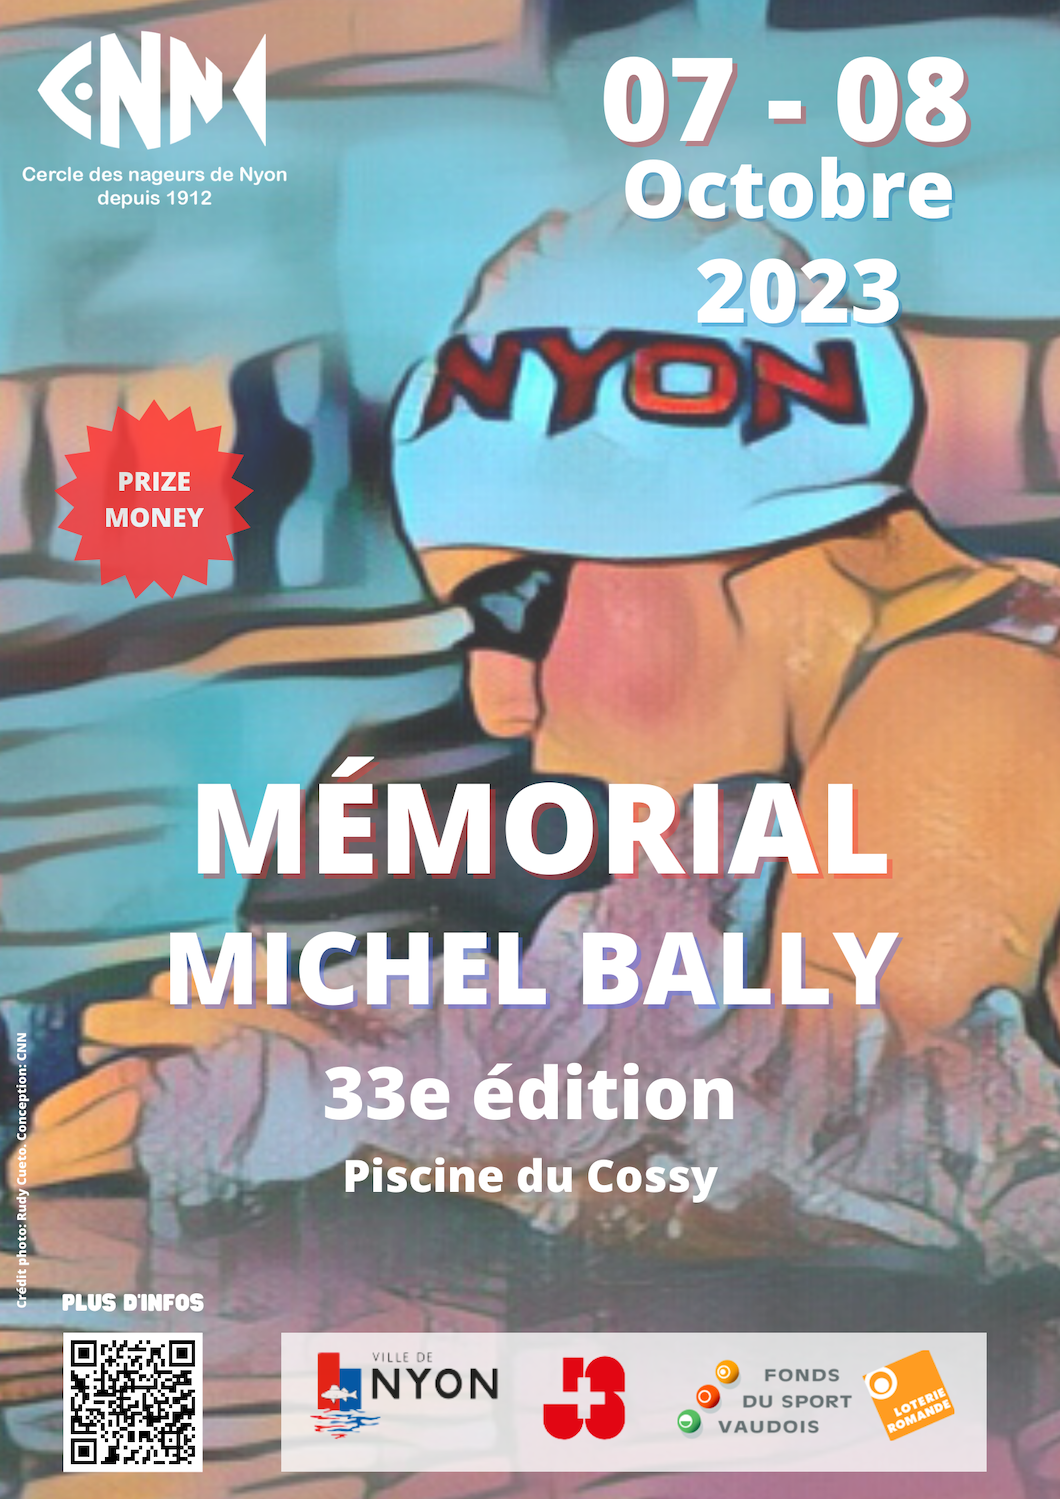 https://cnn-nyon.ch/wp-content/uploads/2023/03/Meeting-Michel-Bally-2023-9.png